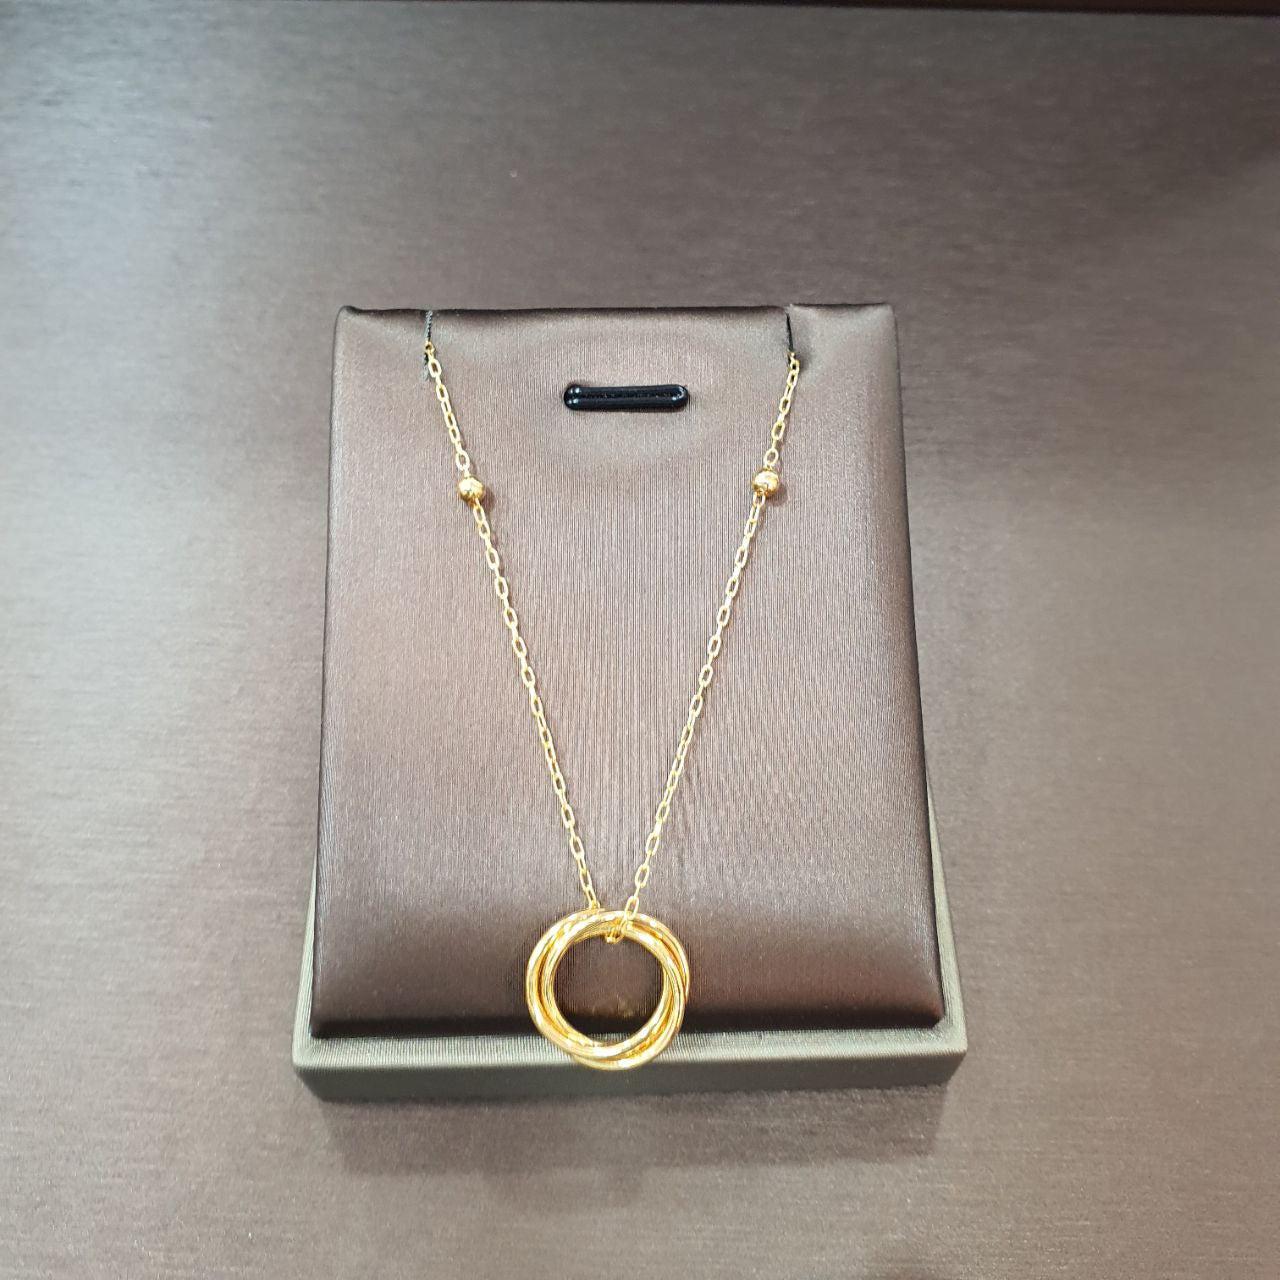 22k / 916 Gold Tri Ring Necklace-Necklaces-Best Gold Shop